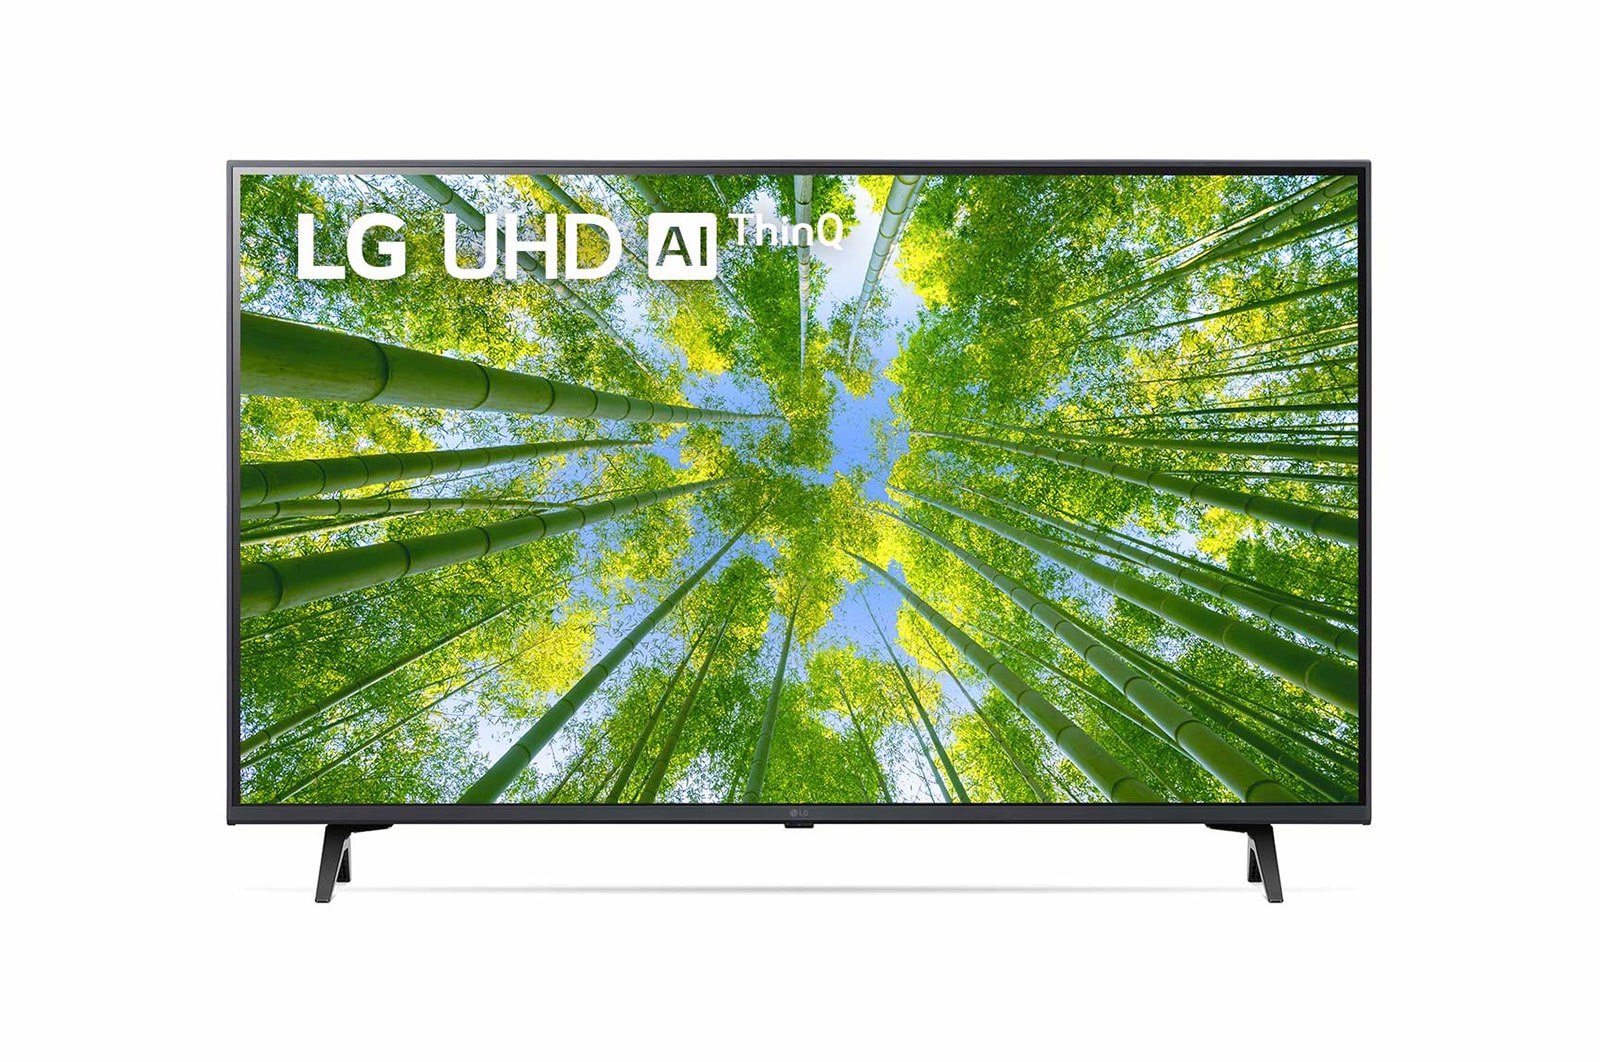 LG Smart TV HDR10 de 43 pulgadas Class 4K 2160p LED WebOS Optimizador de  juegos compatible con Alexa y Google Assistant 43UQ7070Z (renovado)